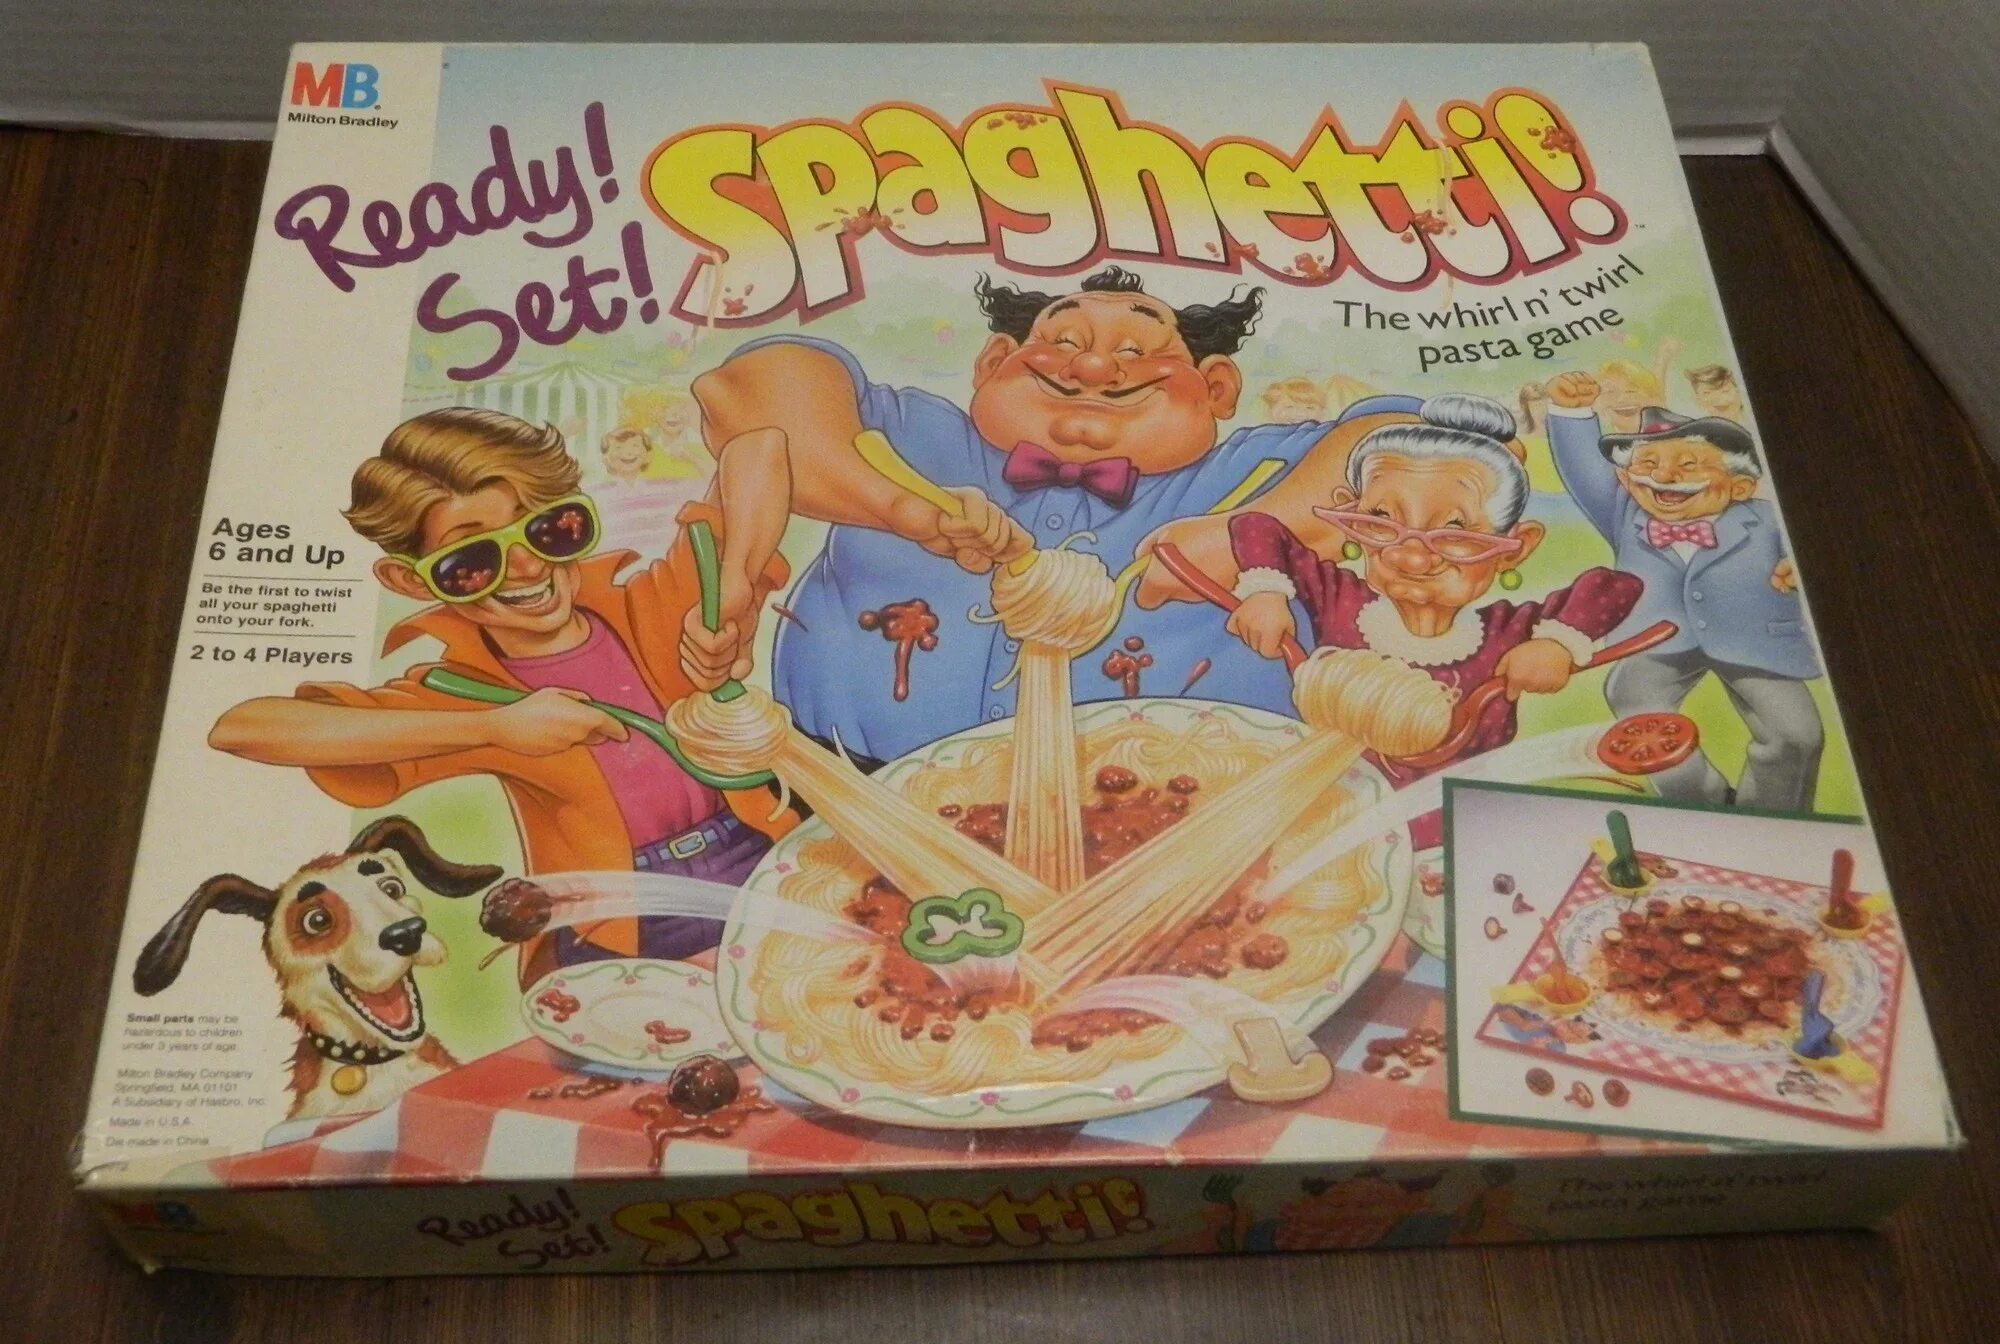 Игра ready Spaghetti. Ready Spaghetti настольная игра. Настольная игра шустрые спагетти. Настольная игра "спагетти". Игру где ломают спагетти